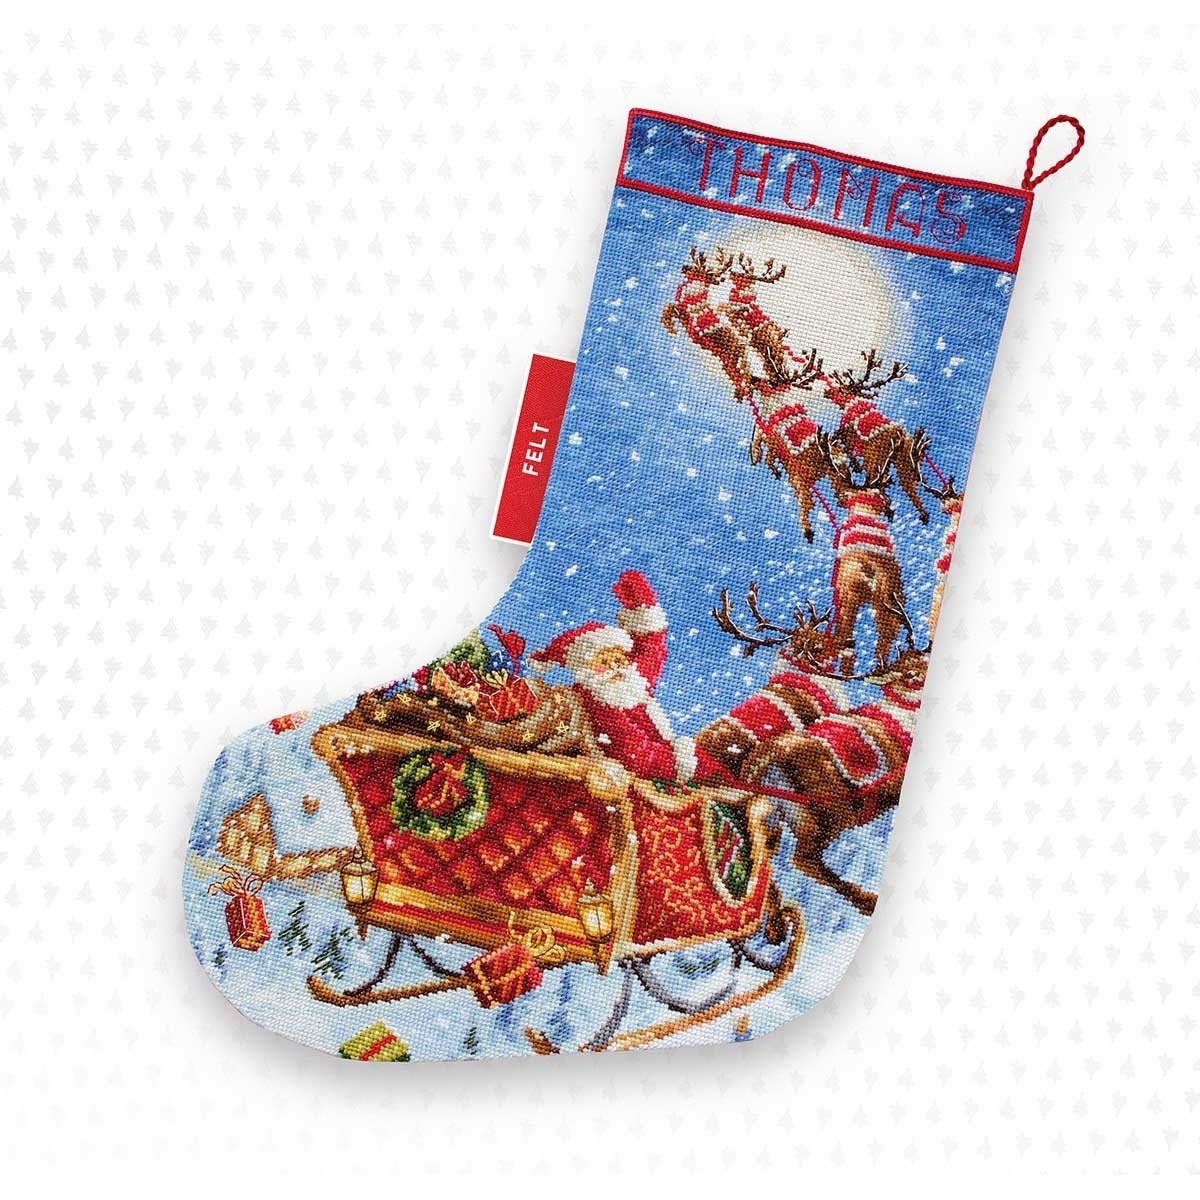 The Reindeers on it's Way! Stocking Cross Stitch Kit фото 1